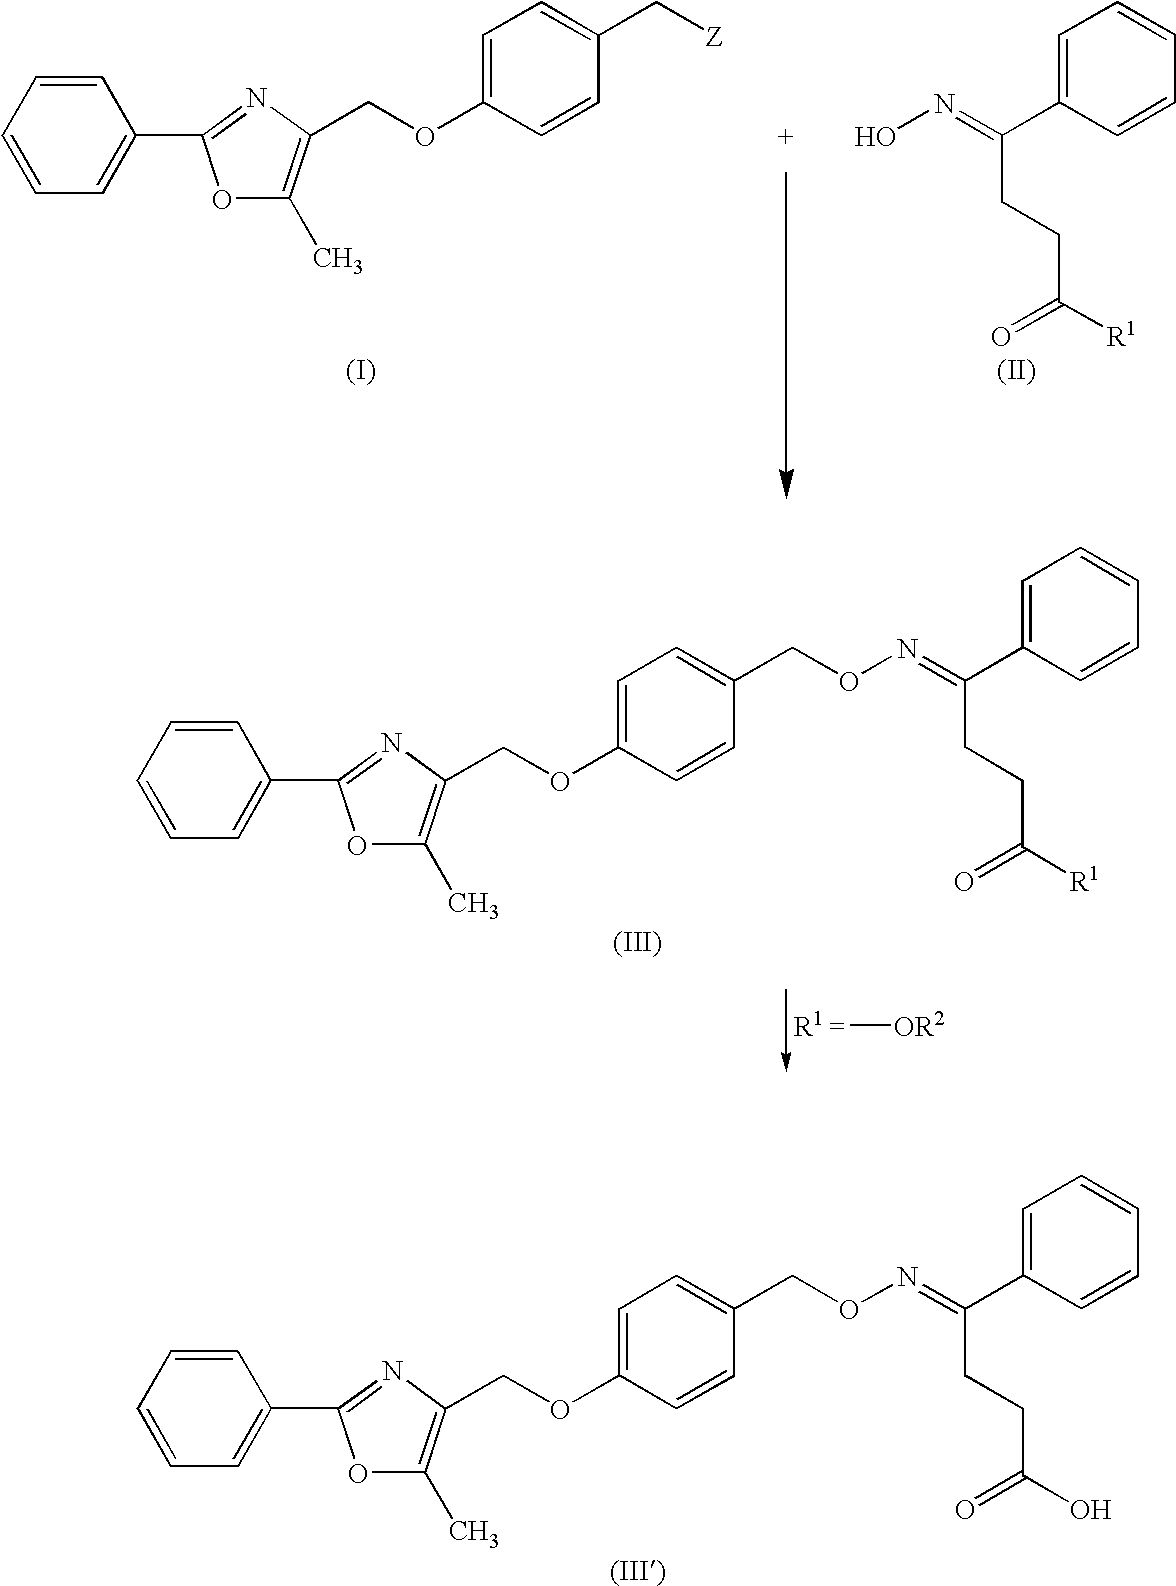 Crystals of an oxyiminoalkanoic acid derivative and their use as antidiabetics